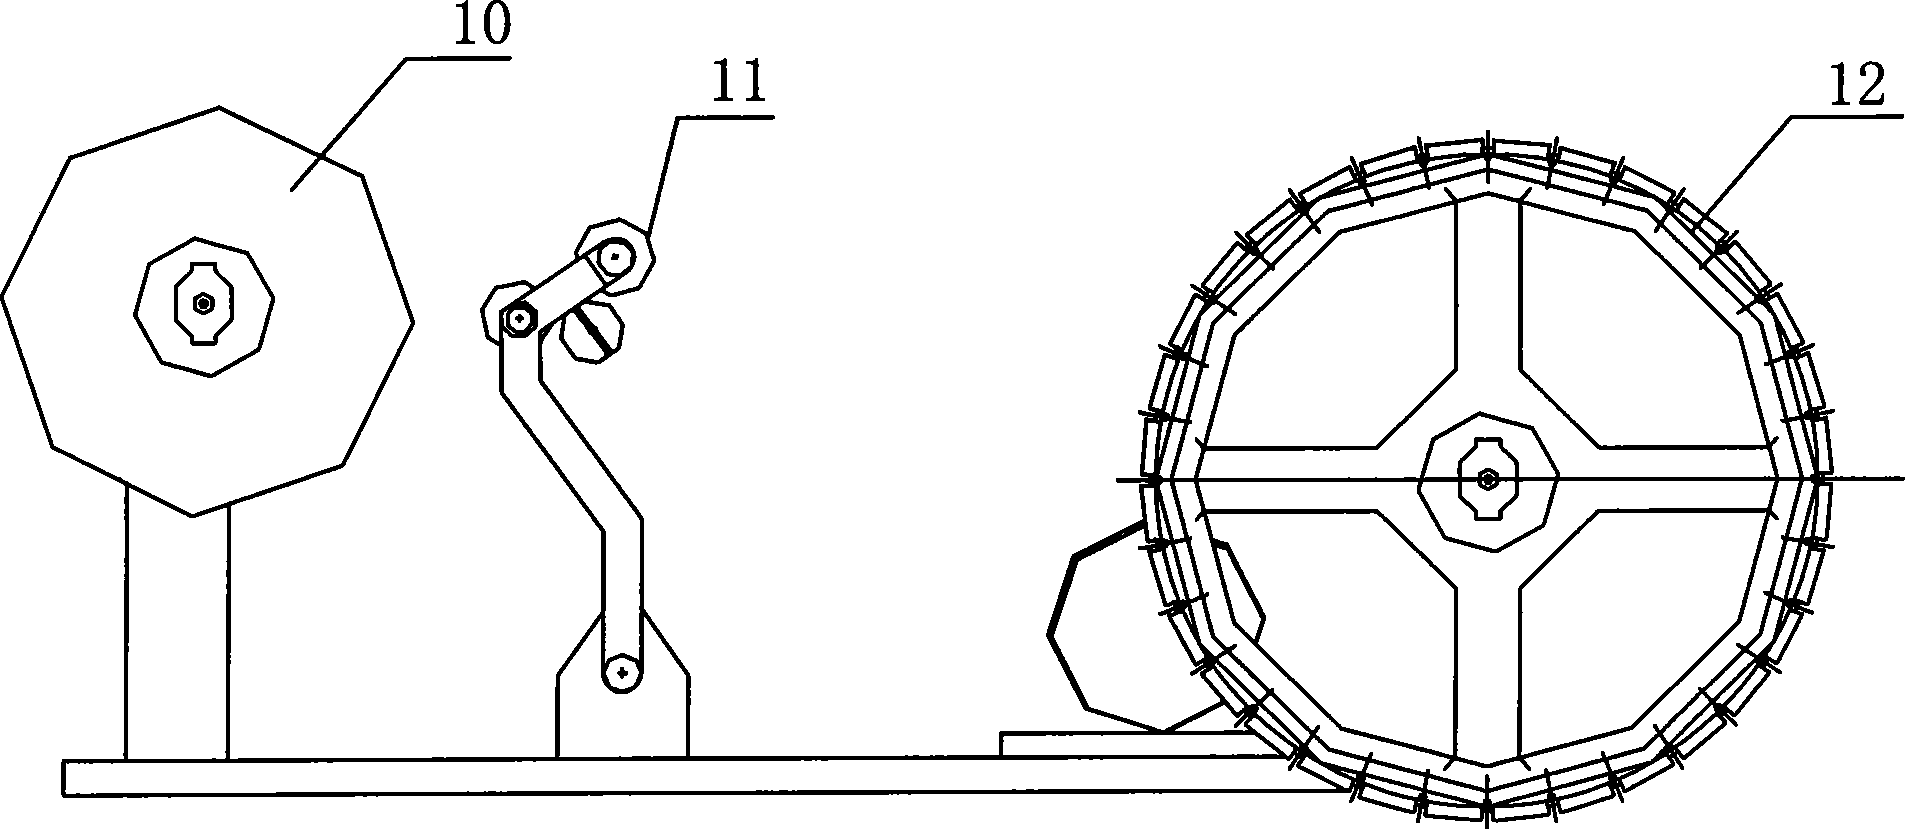 Production method of dual-brush type sealing device